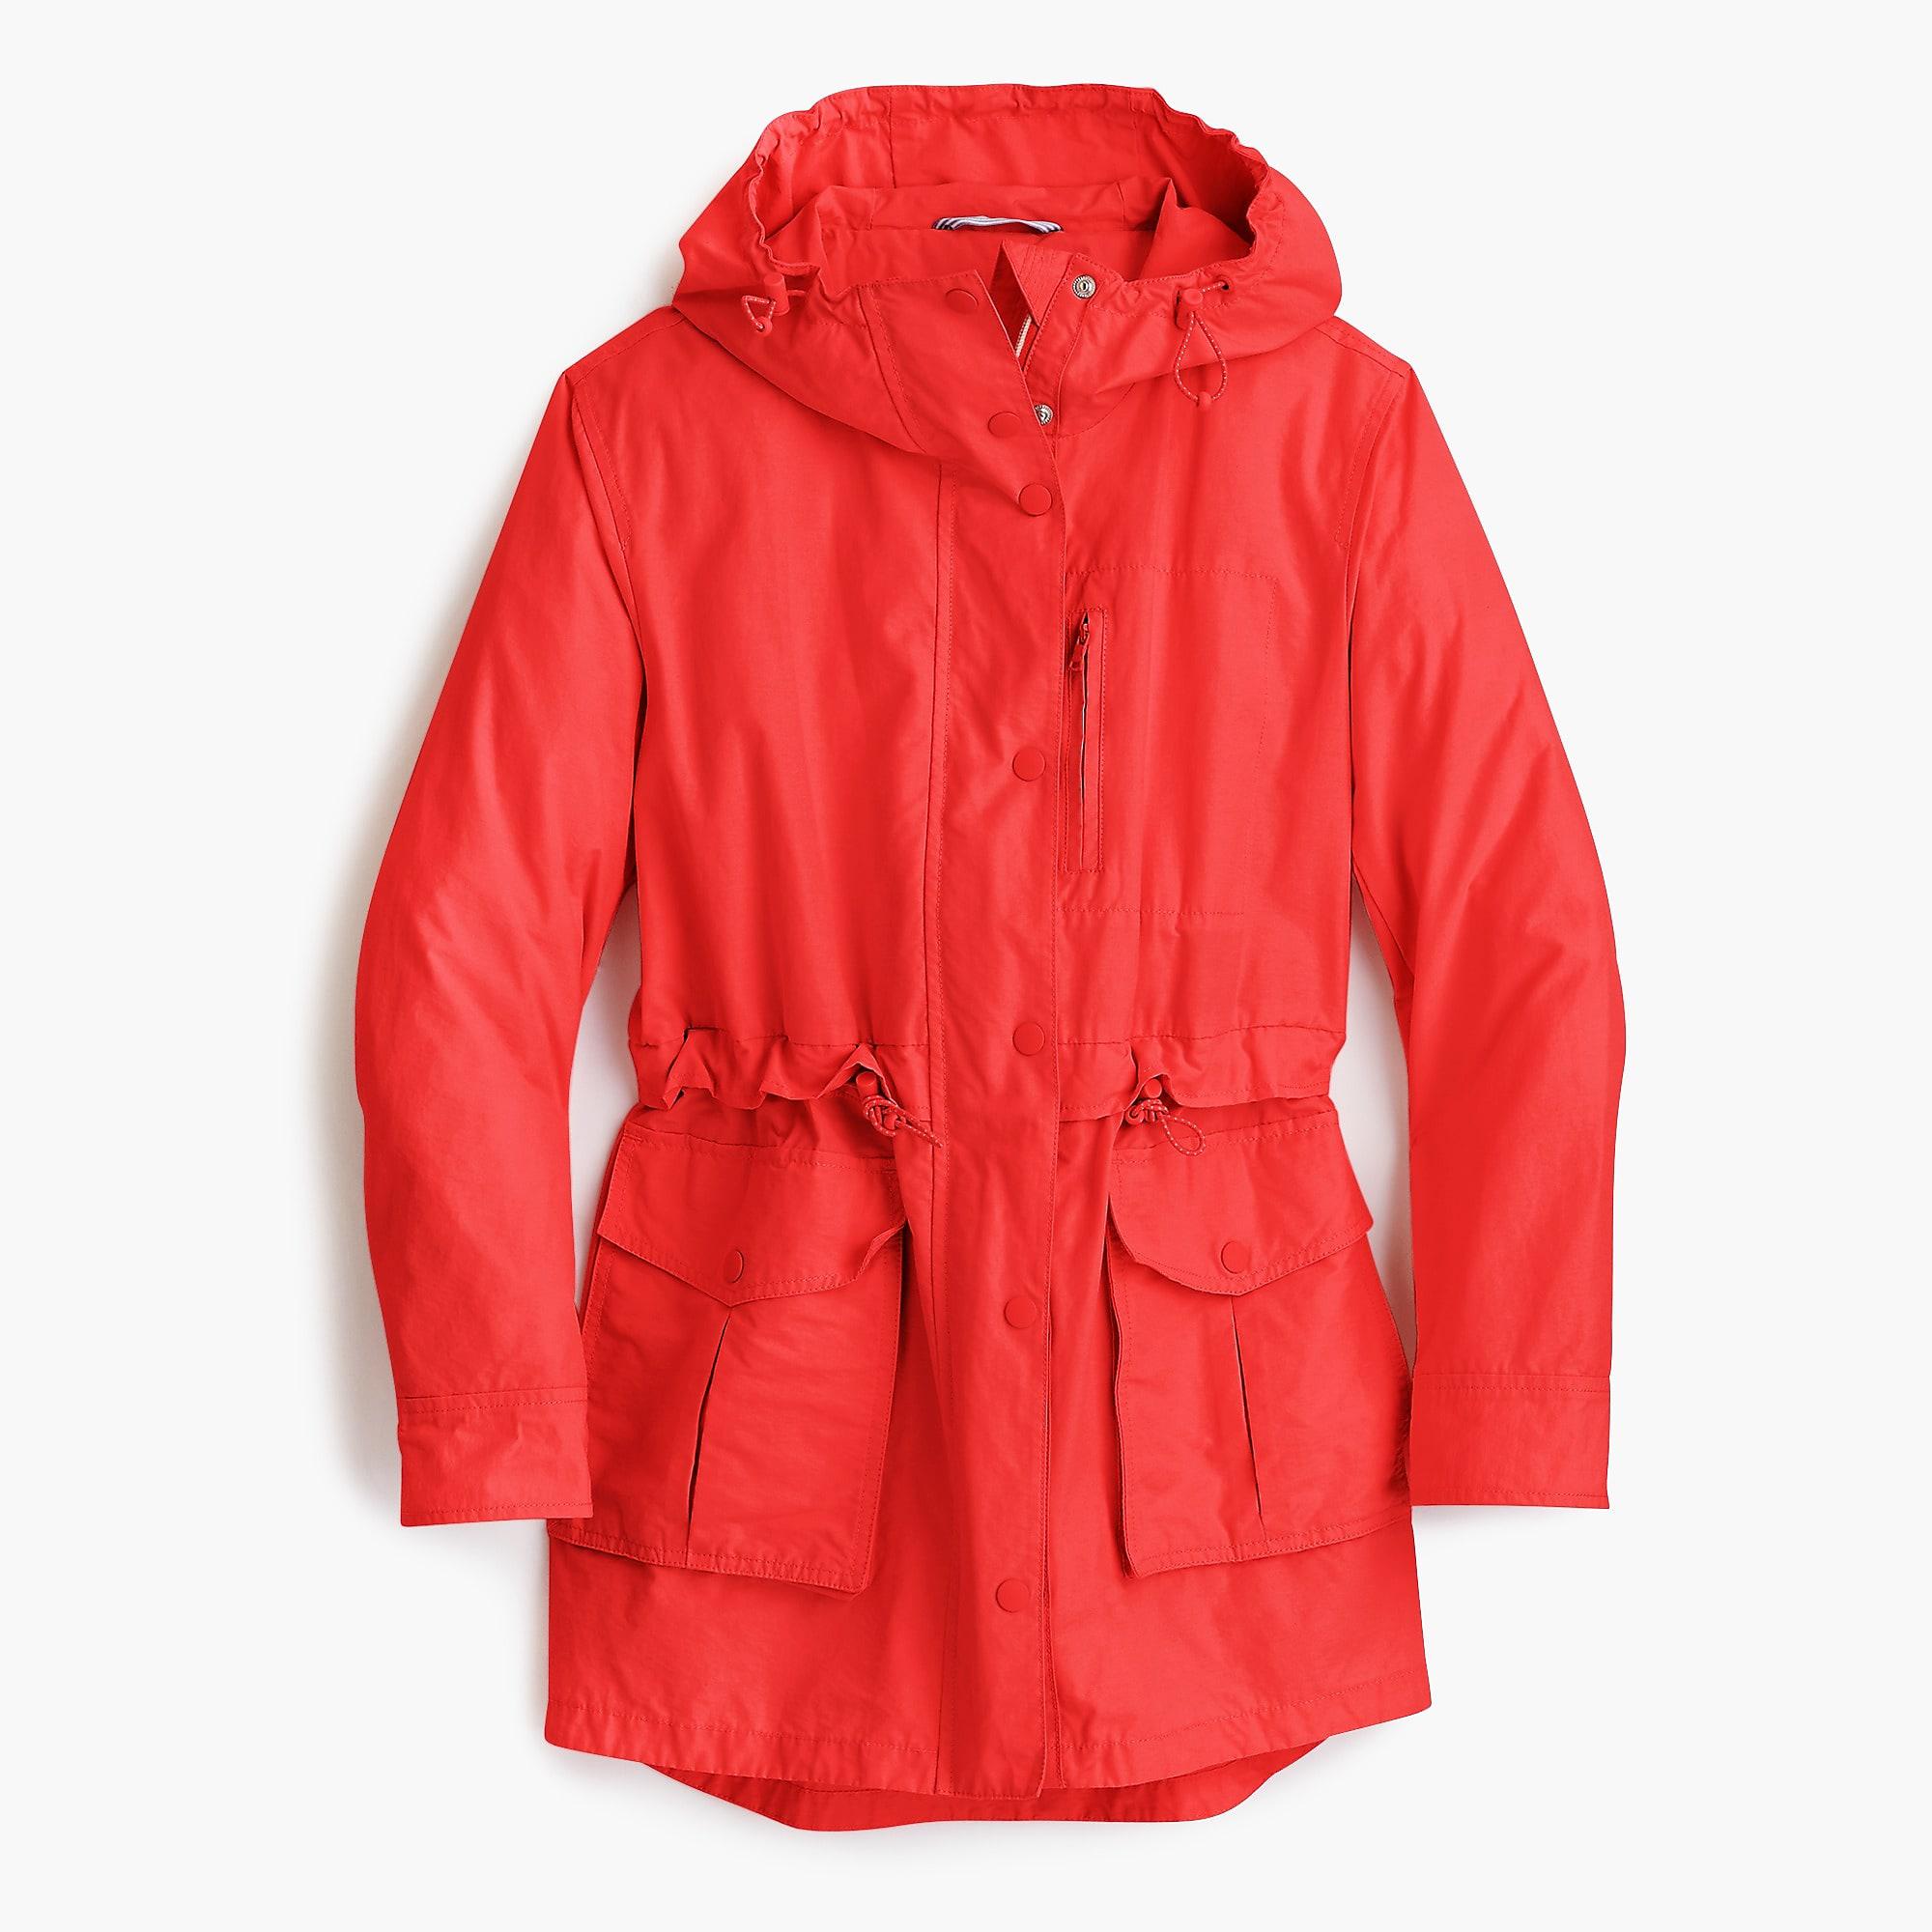 J.Crew Cotton Petite Perfect Rain Jacket in Bright Cerise (Red) - Lyst